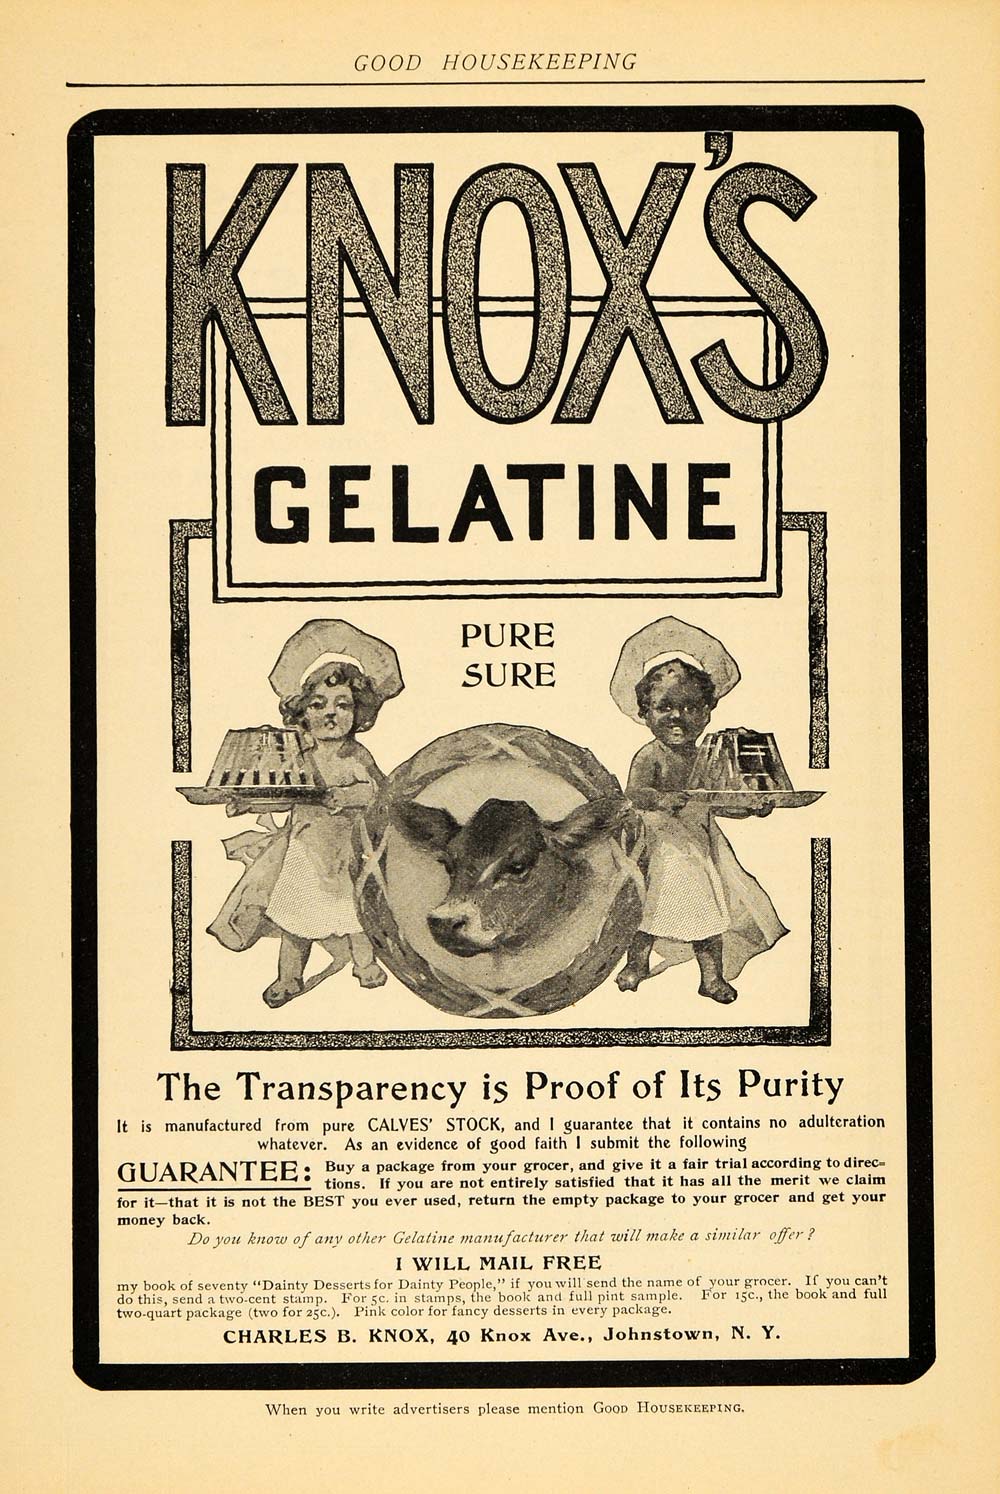 1902 Ad Charles B. Knox Gelatine Calves' Stock NY - ORIGINAL ADVERTISING GH2